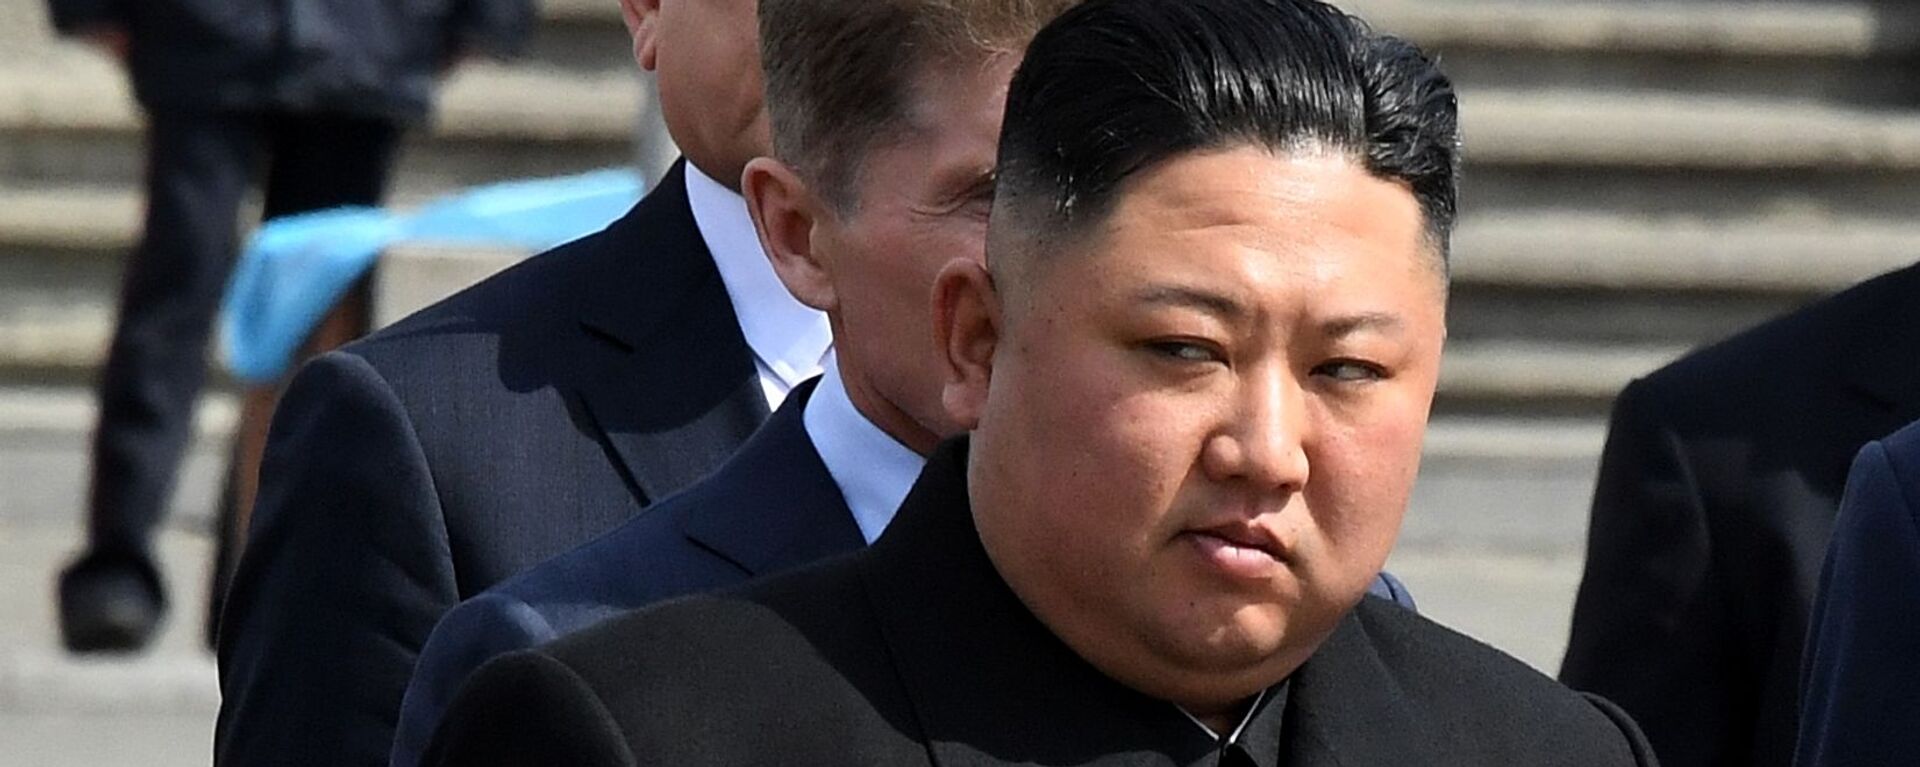 Kim Jong-un, líder de Corea del Norte (archivo) - Sputnik Mundo, 1920, 24.03.2021